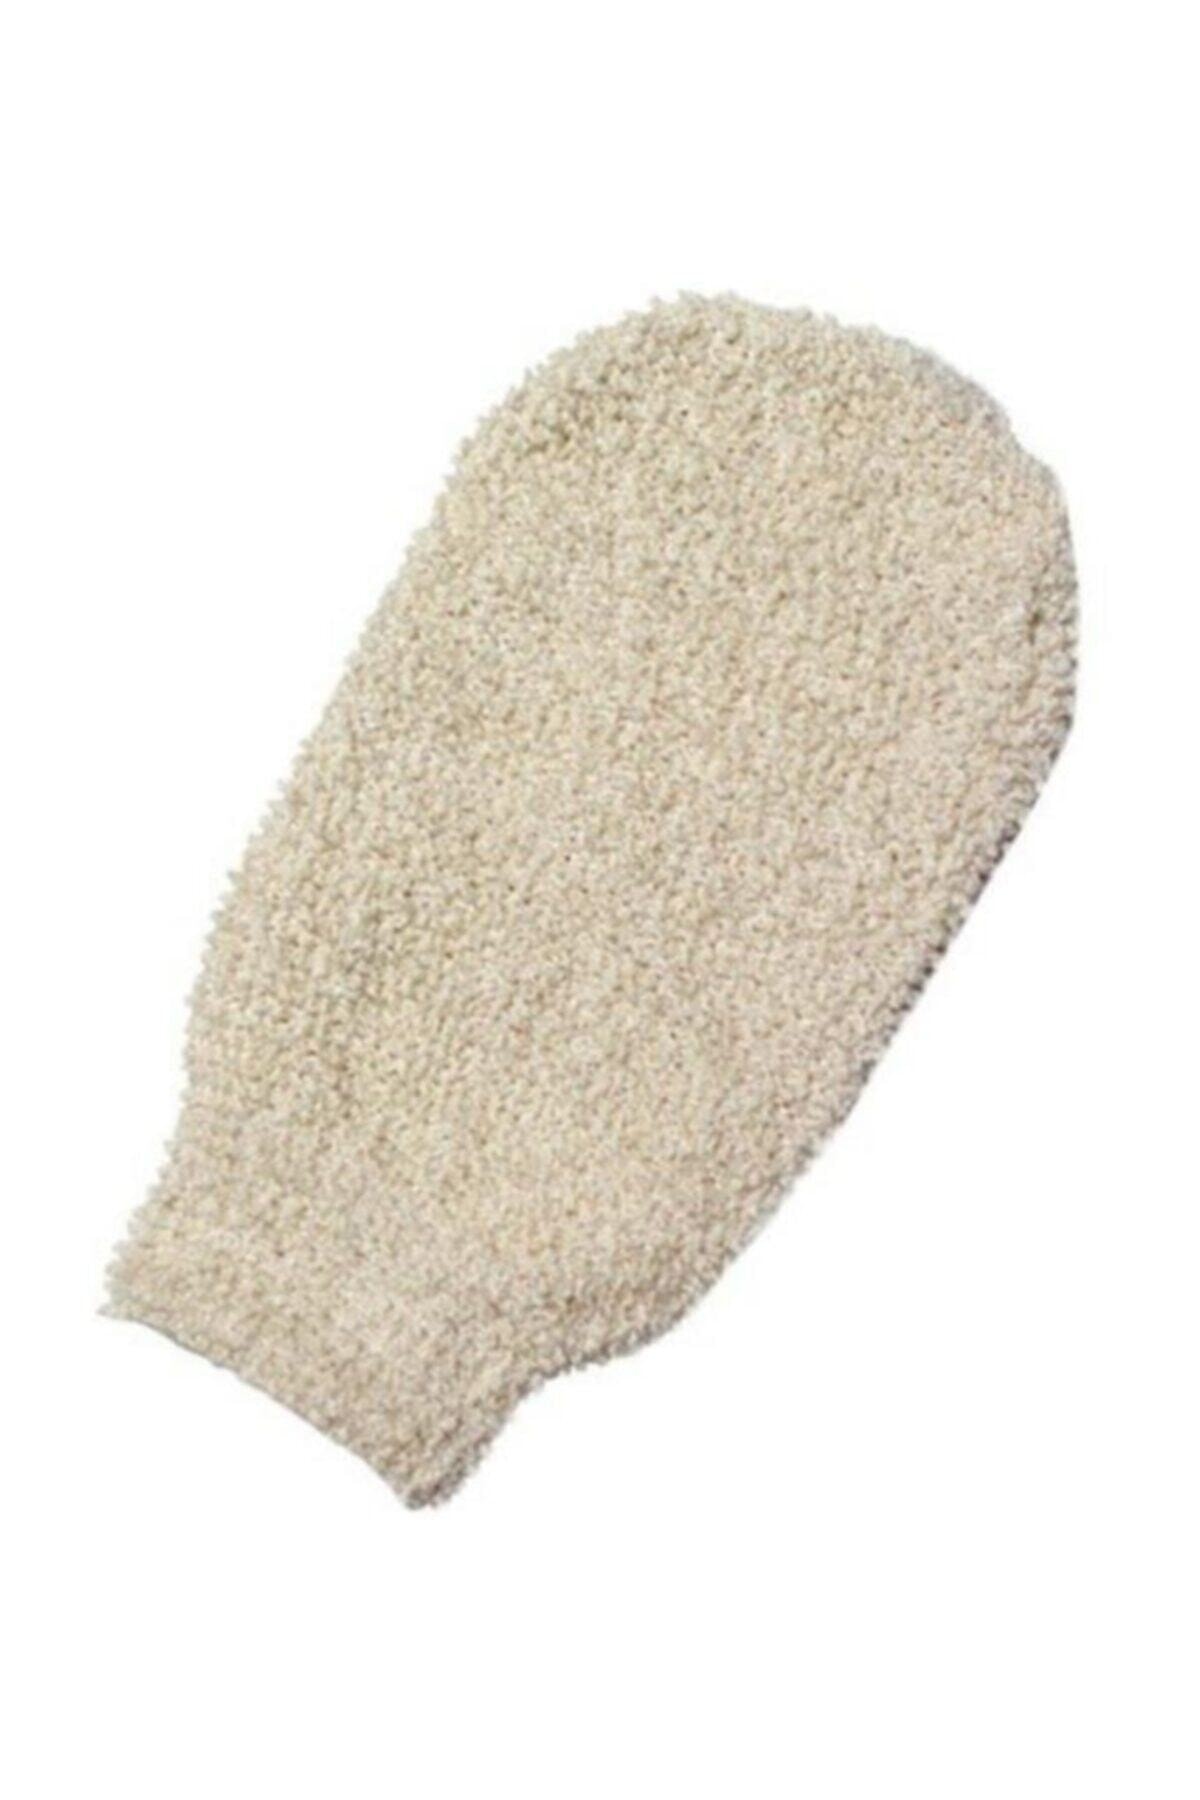 Fe Havlu Eldiven Cotton Bath Glove